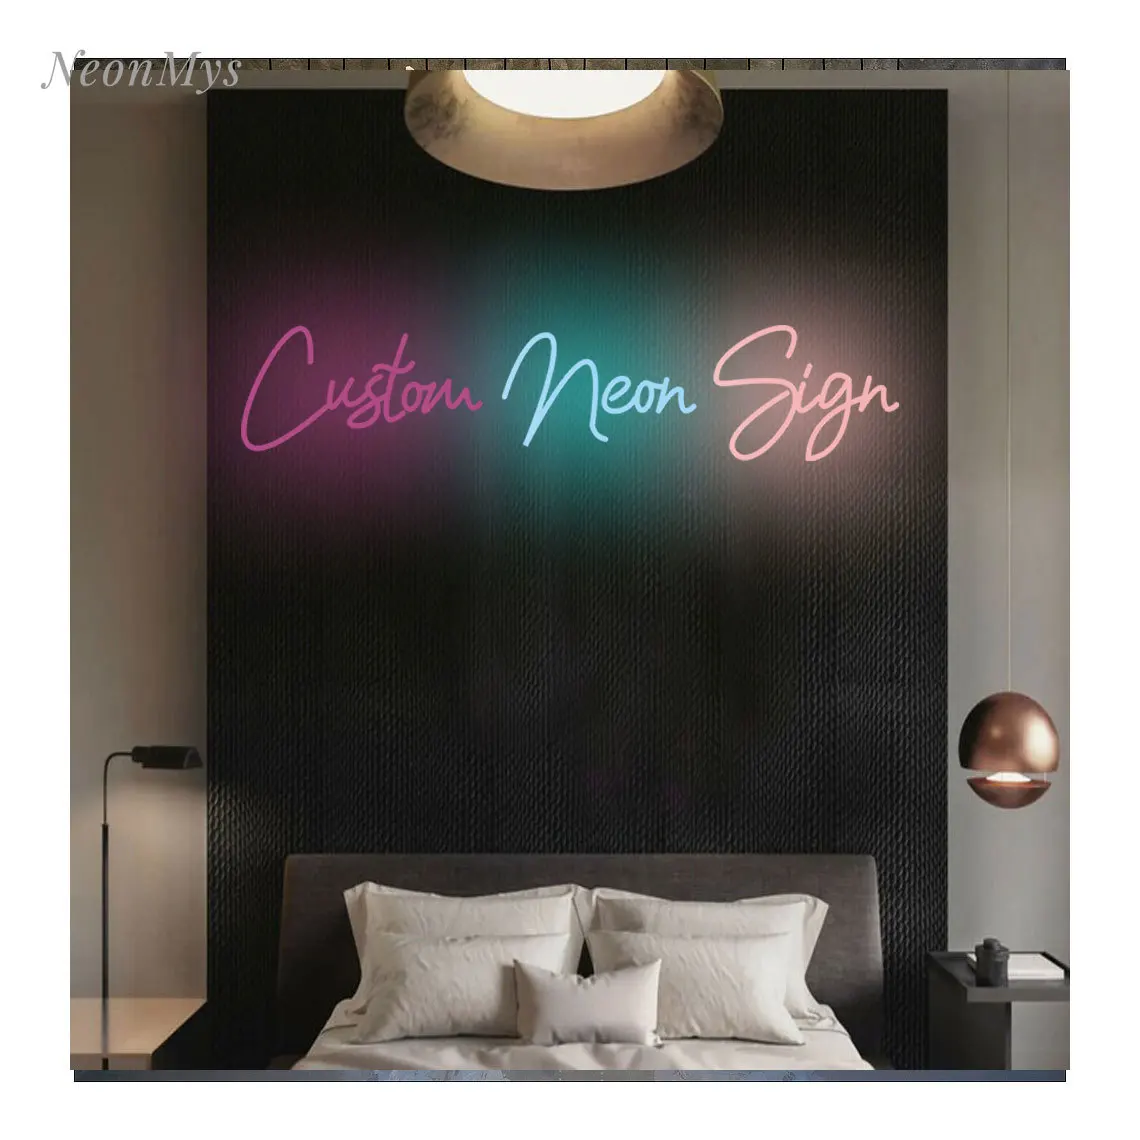 

Custom Neon Sign Led Night Light Kawaii Room Decor Wall Decoration Bedroom Wedding Gaming Signboard Lighting (1 line) 12 Colors